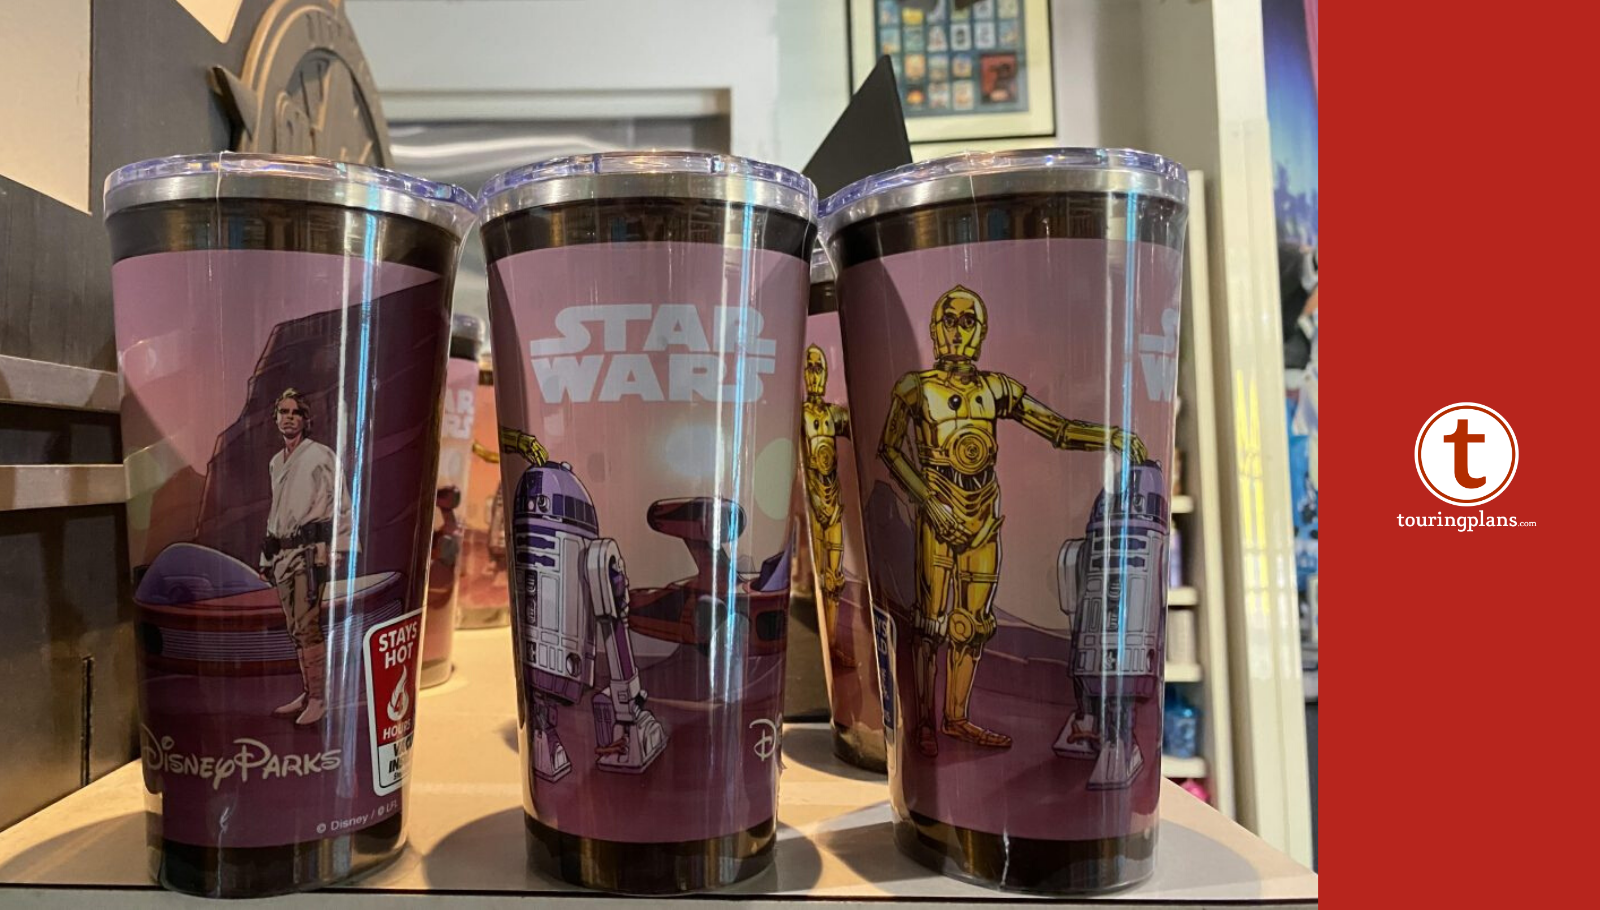 https://touringplans.com/blog/wp-content/uploads/2020/01/Star-Wars-refillable-mugs.png